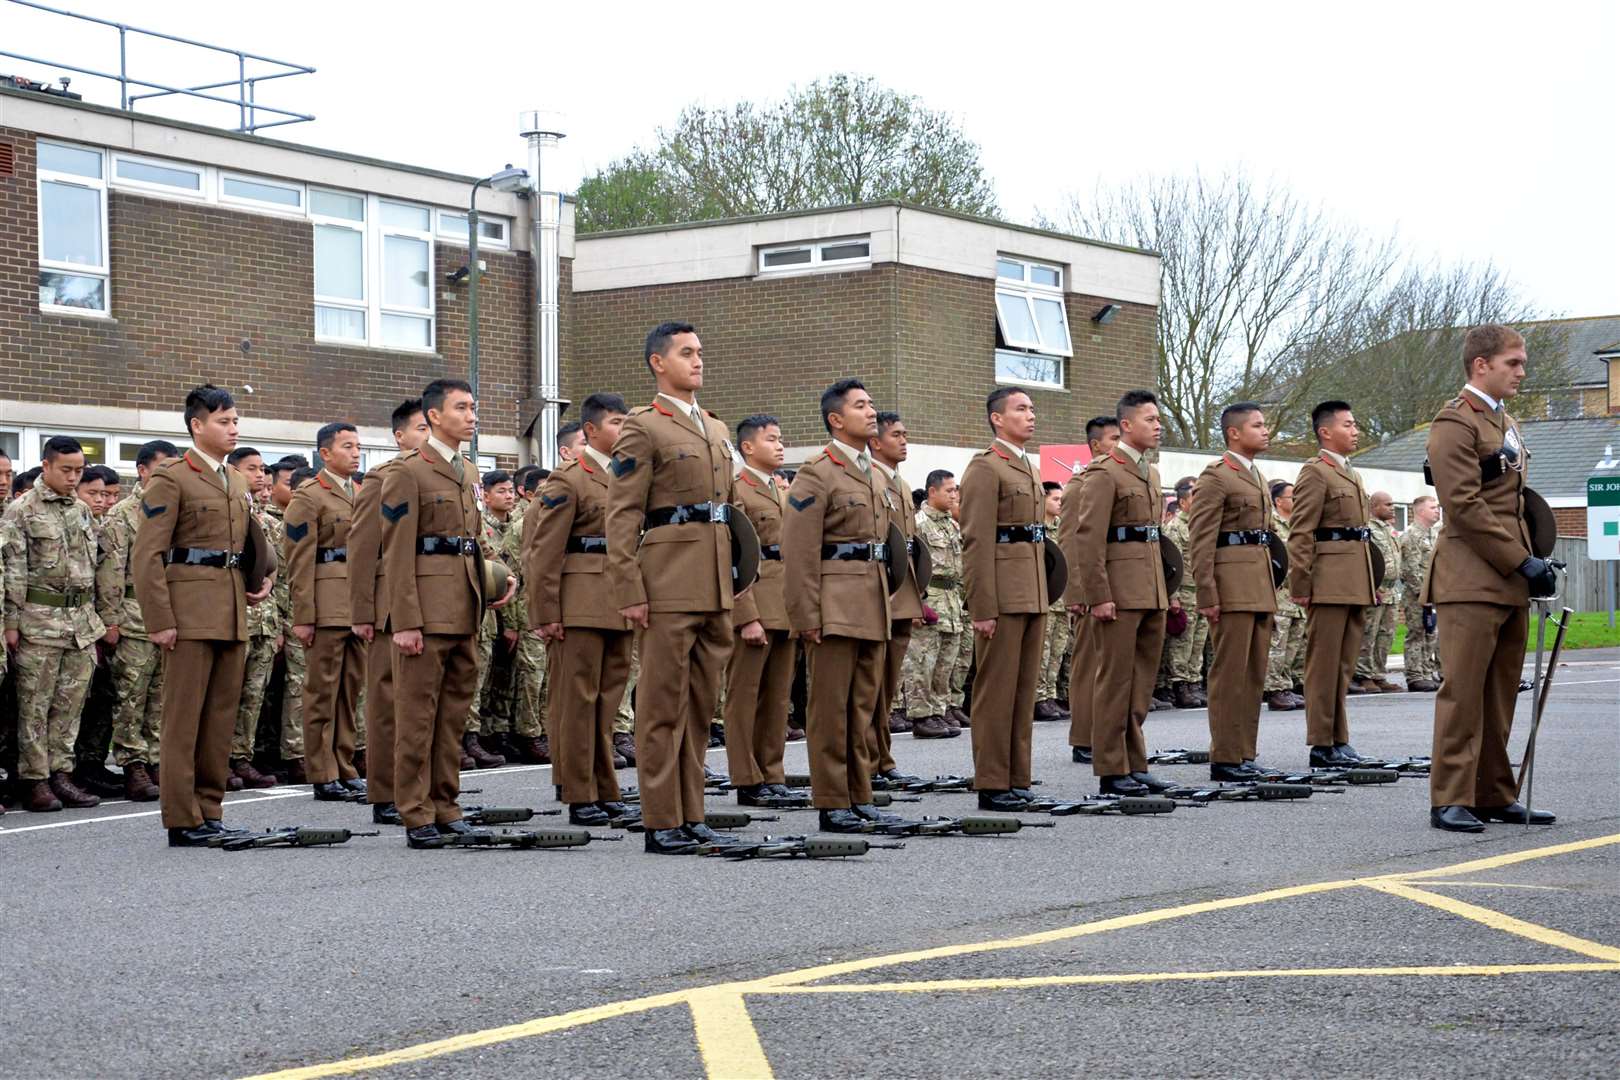 Armistice Day service at Shorncliffe Barracks in Folkestone